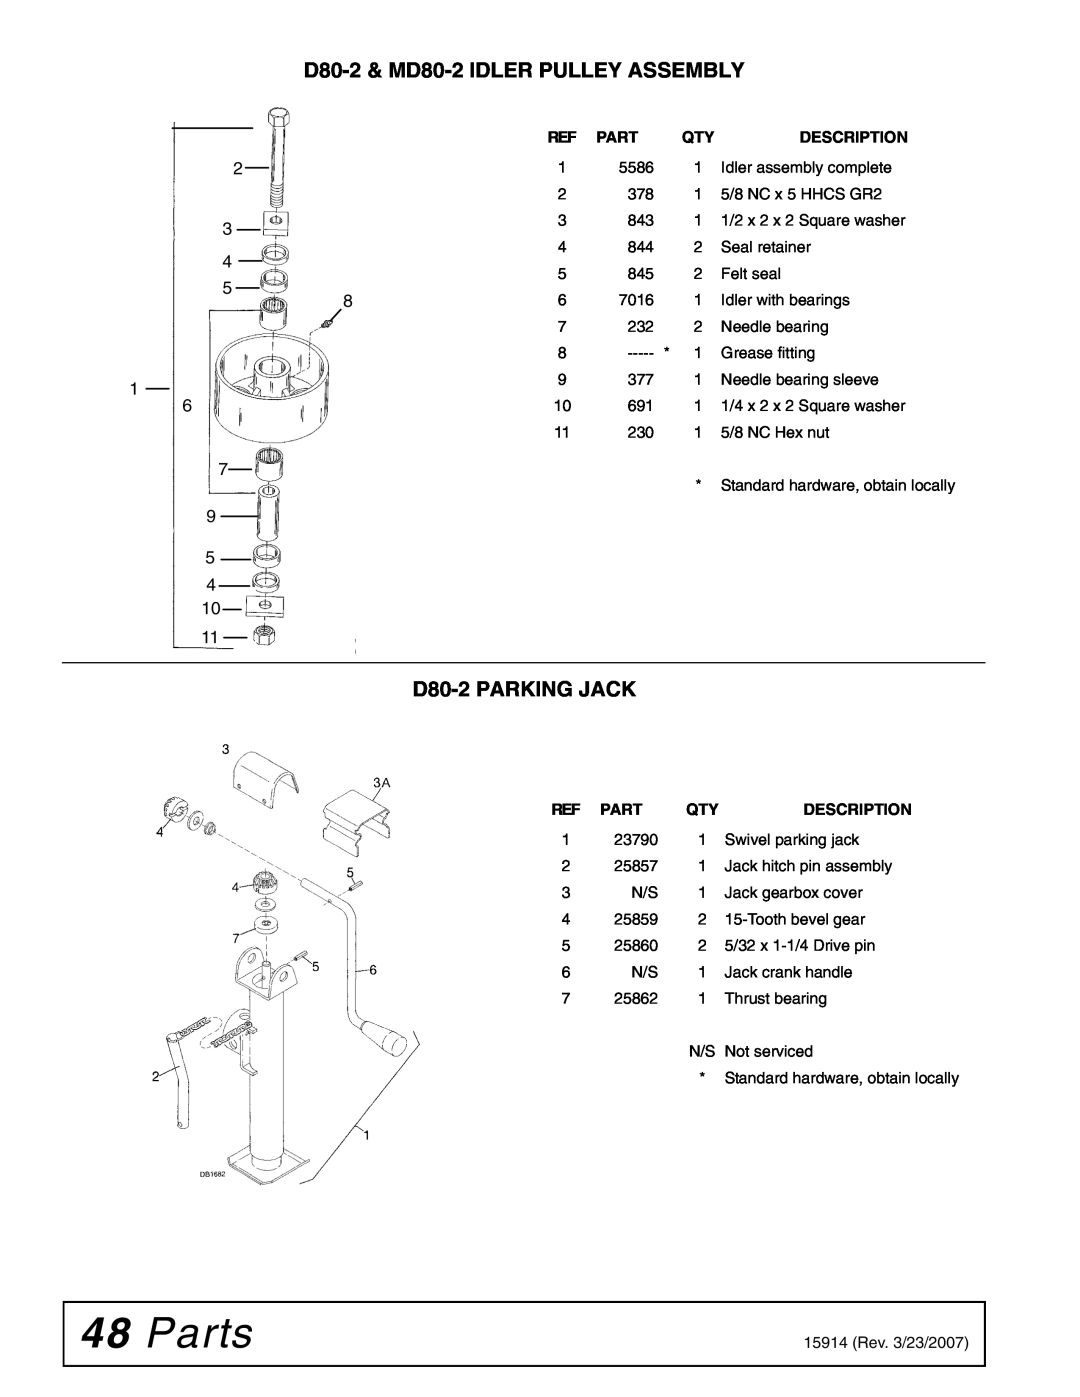 Woods Equipment manual Parts, D80-2& MD80-2IDLER PULLEY ASSEMBLY, D80-2PARKING JACK, Description 